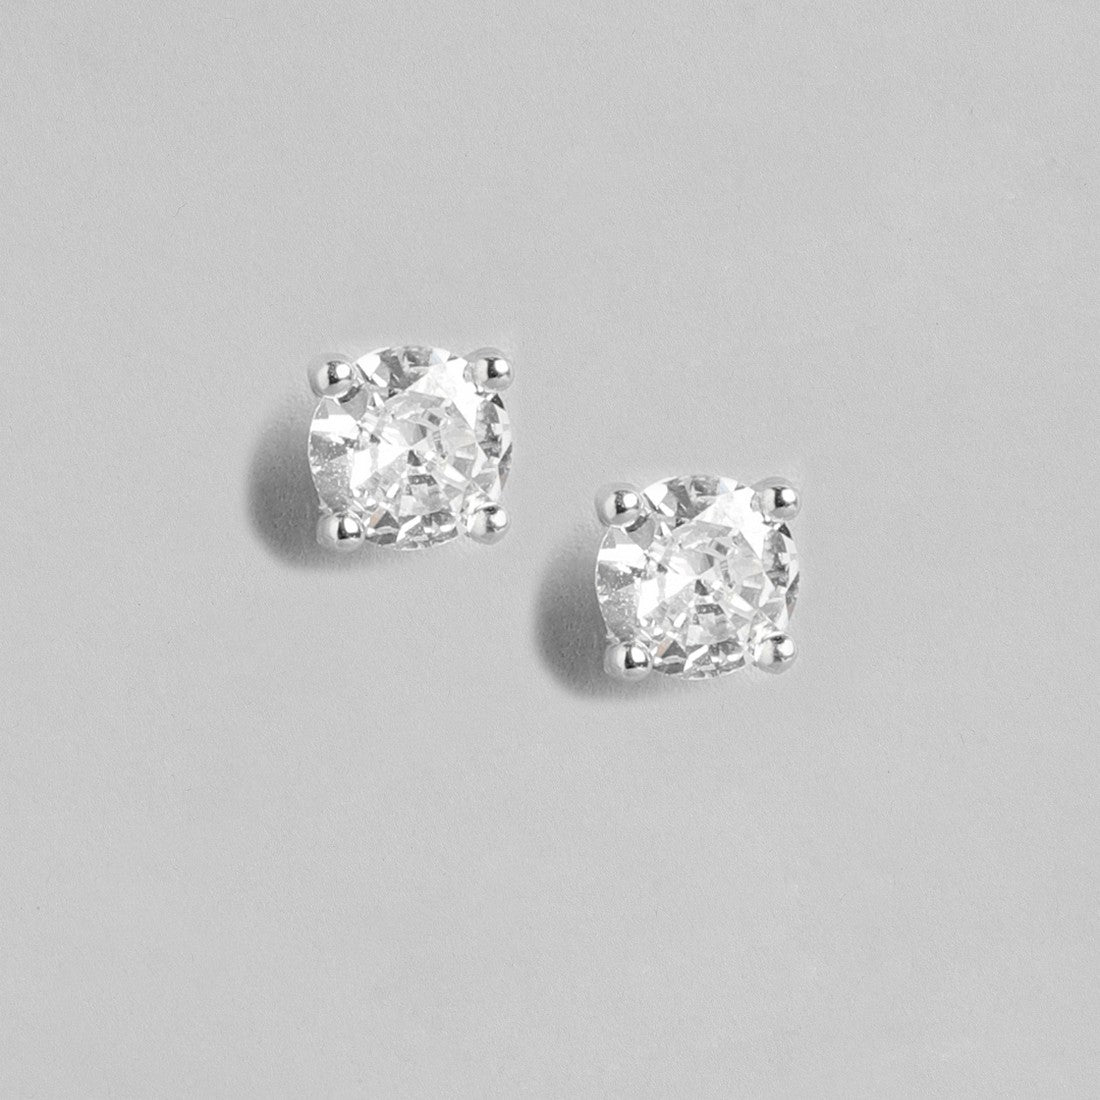 Sensational Solitaire 925 Silver Earrings